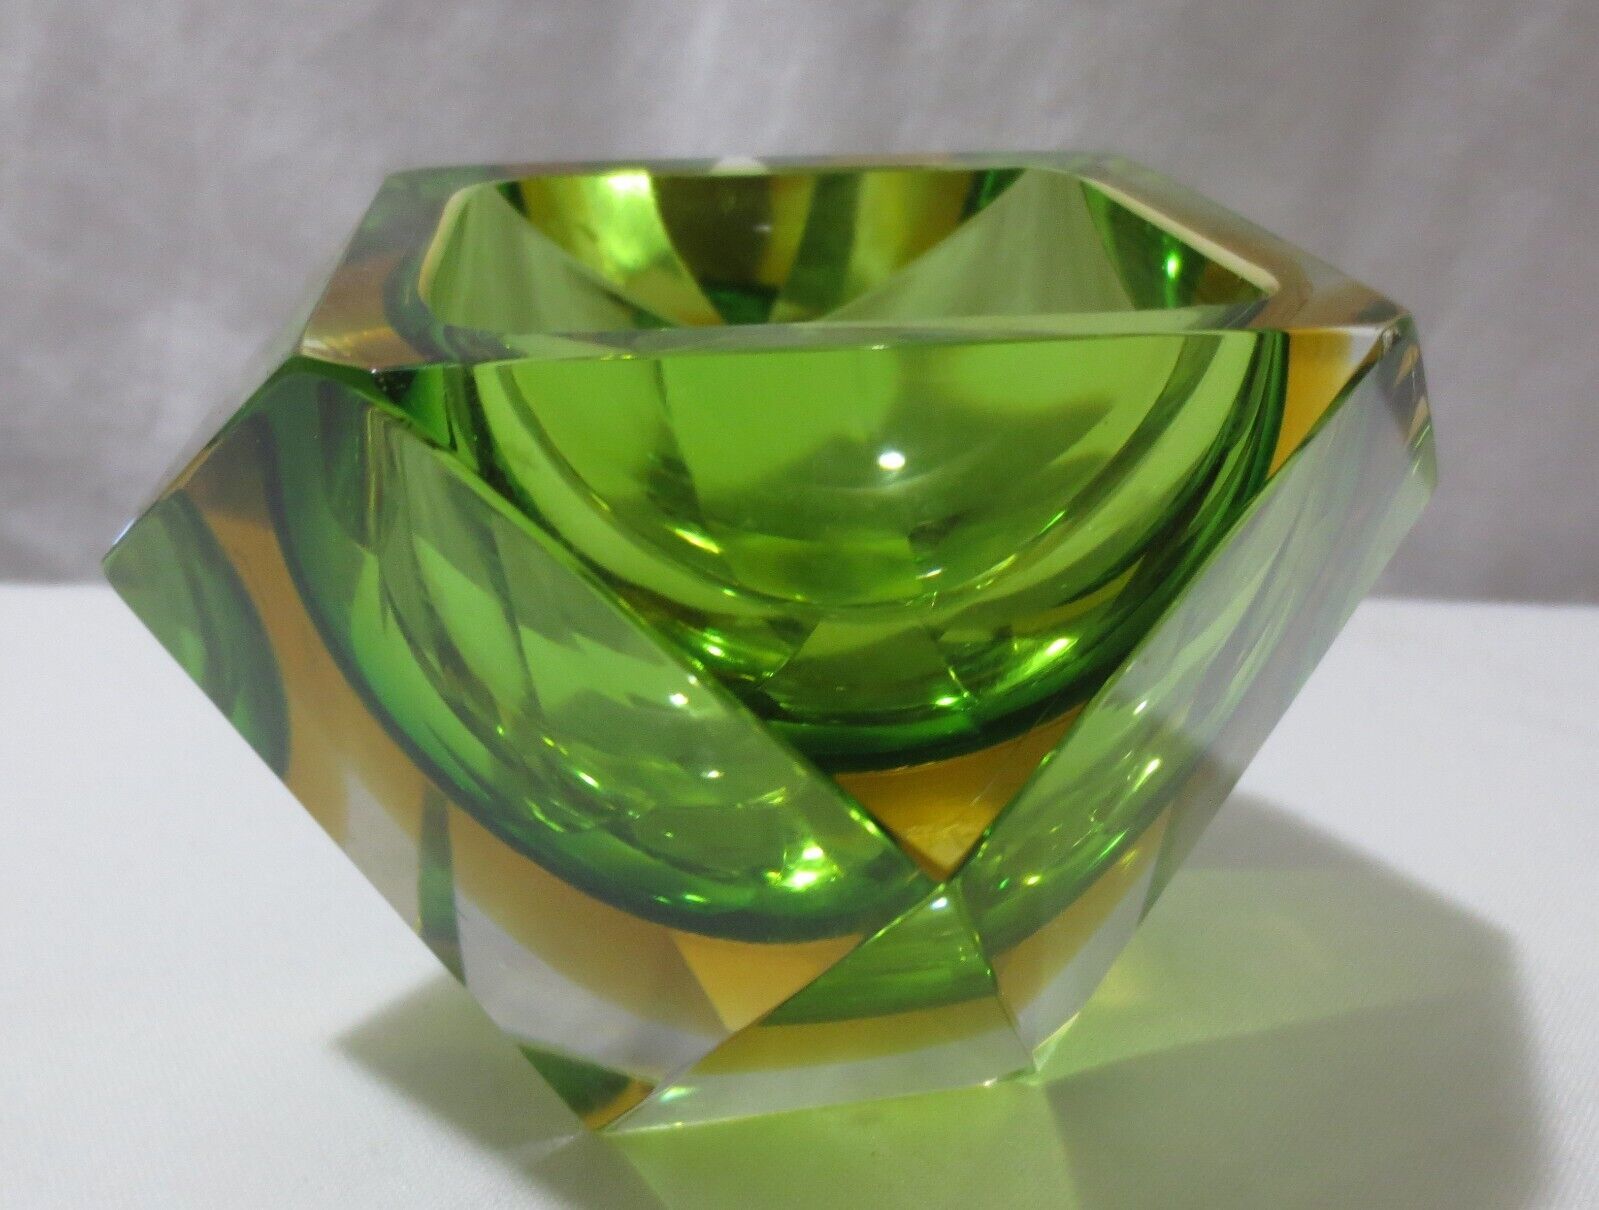 Murano Art Glass Green & Gold Votive Candle holder 3" tall - $55.00